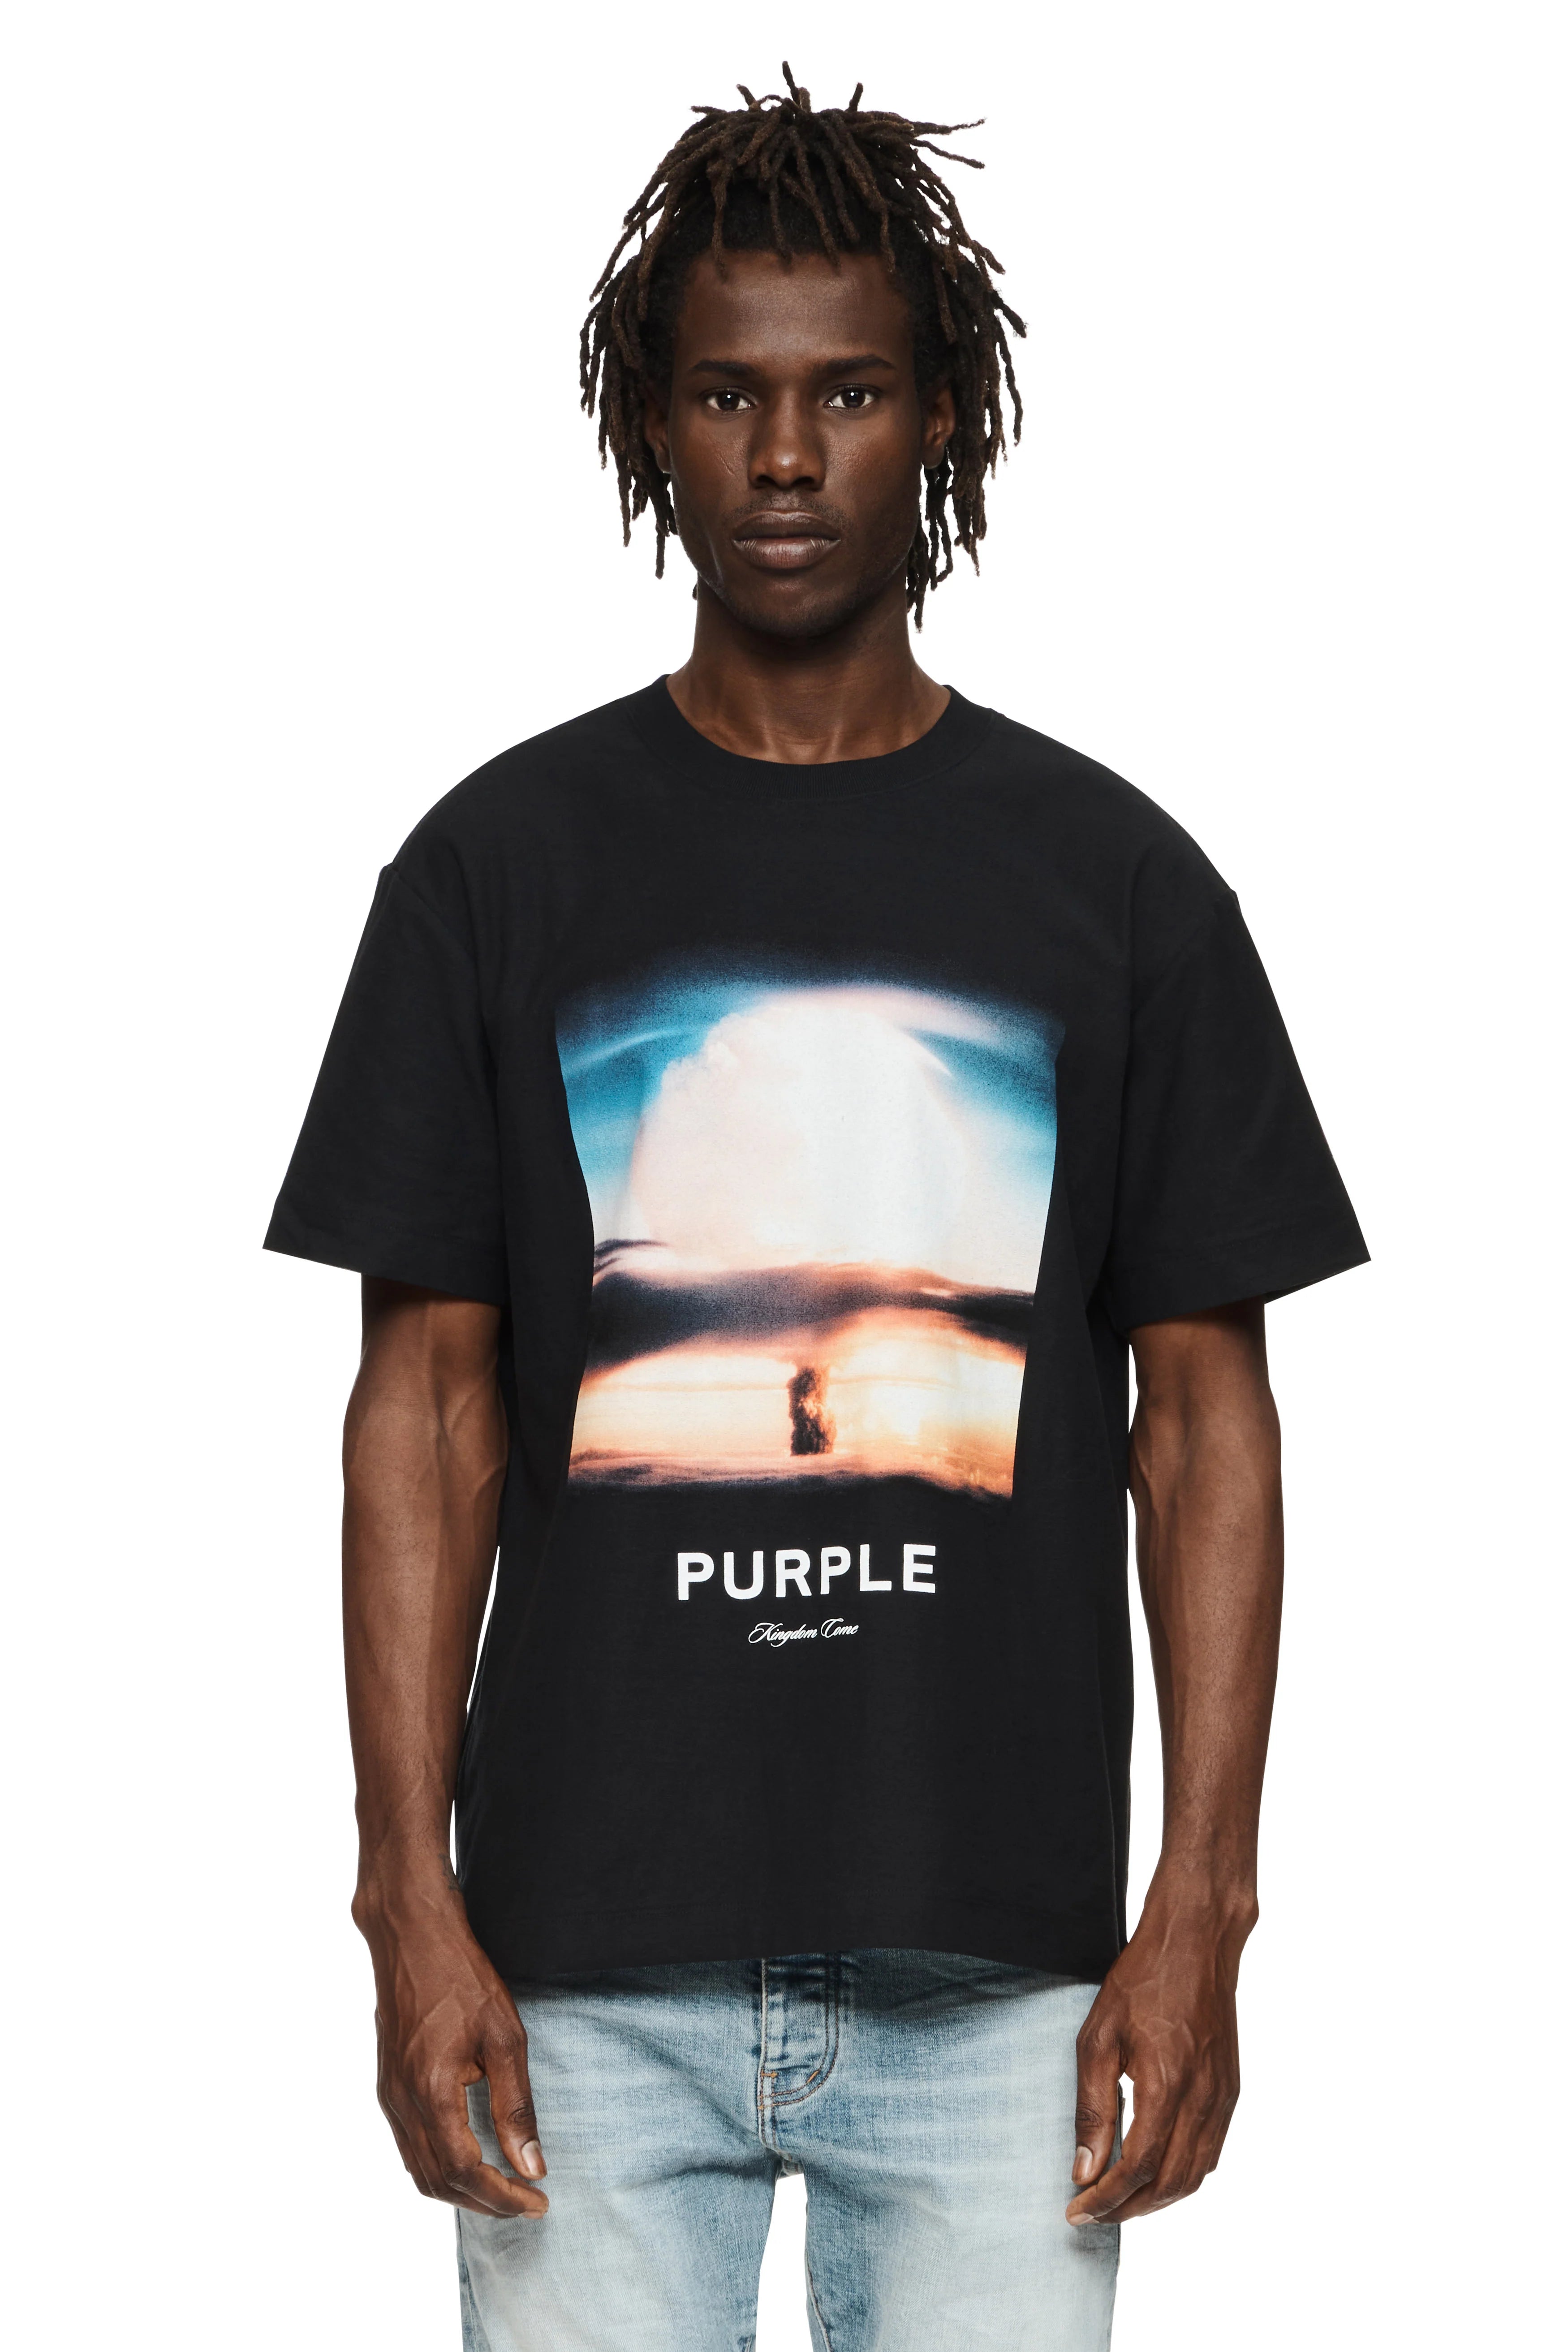 Purple Brand mushroom cloud graphic Sunset T-Shirt